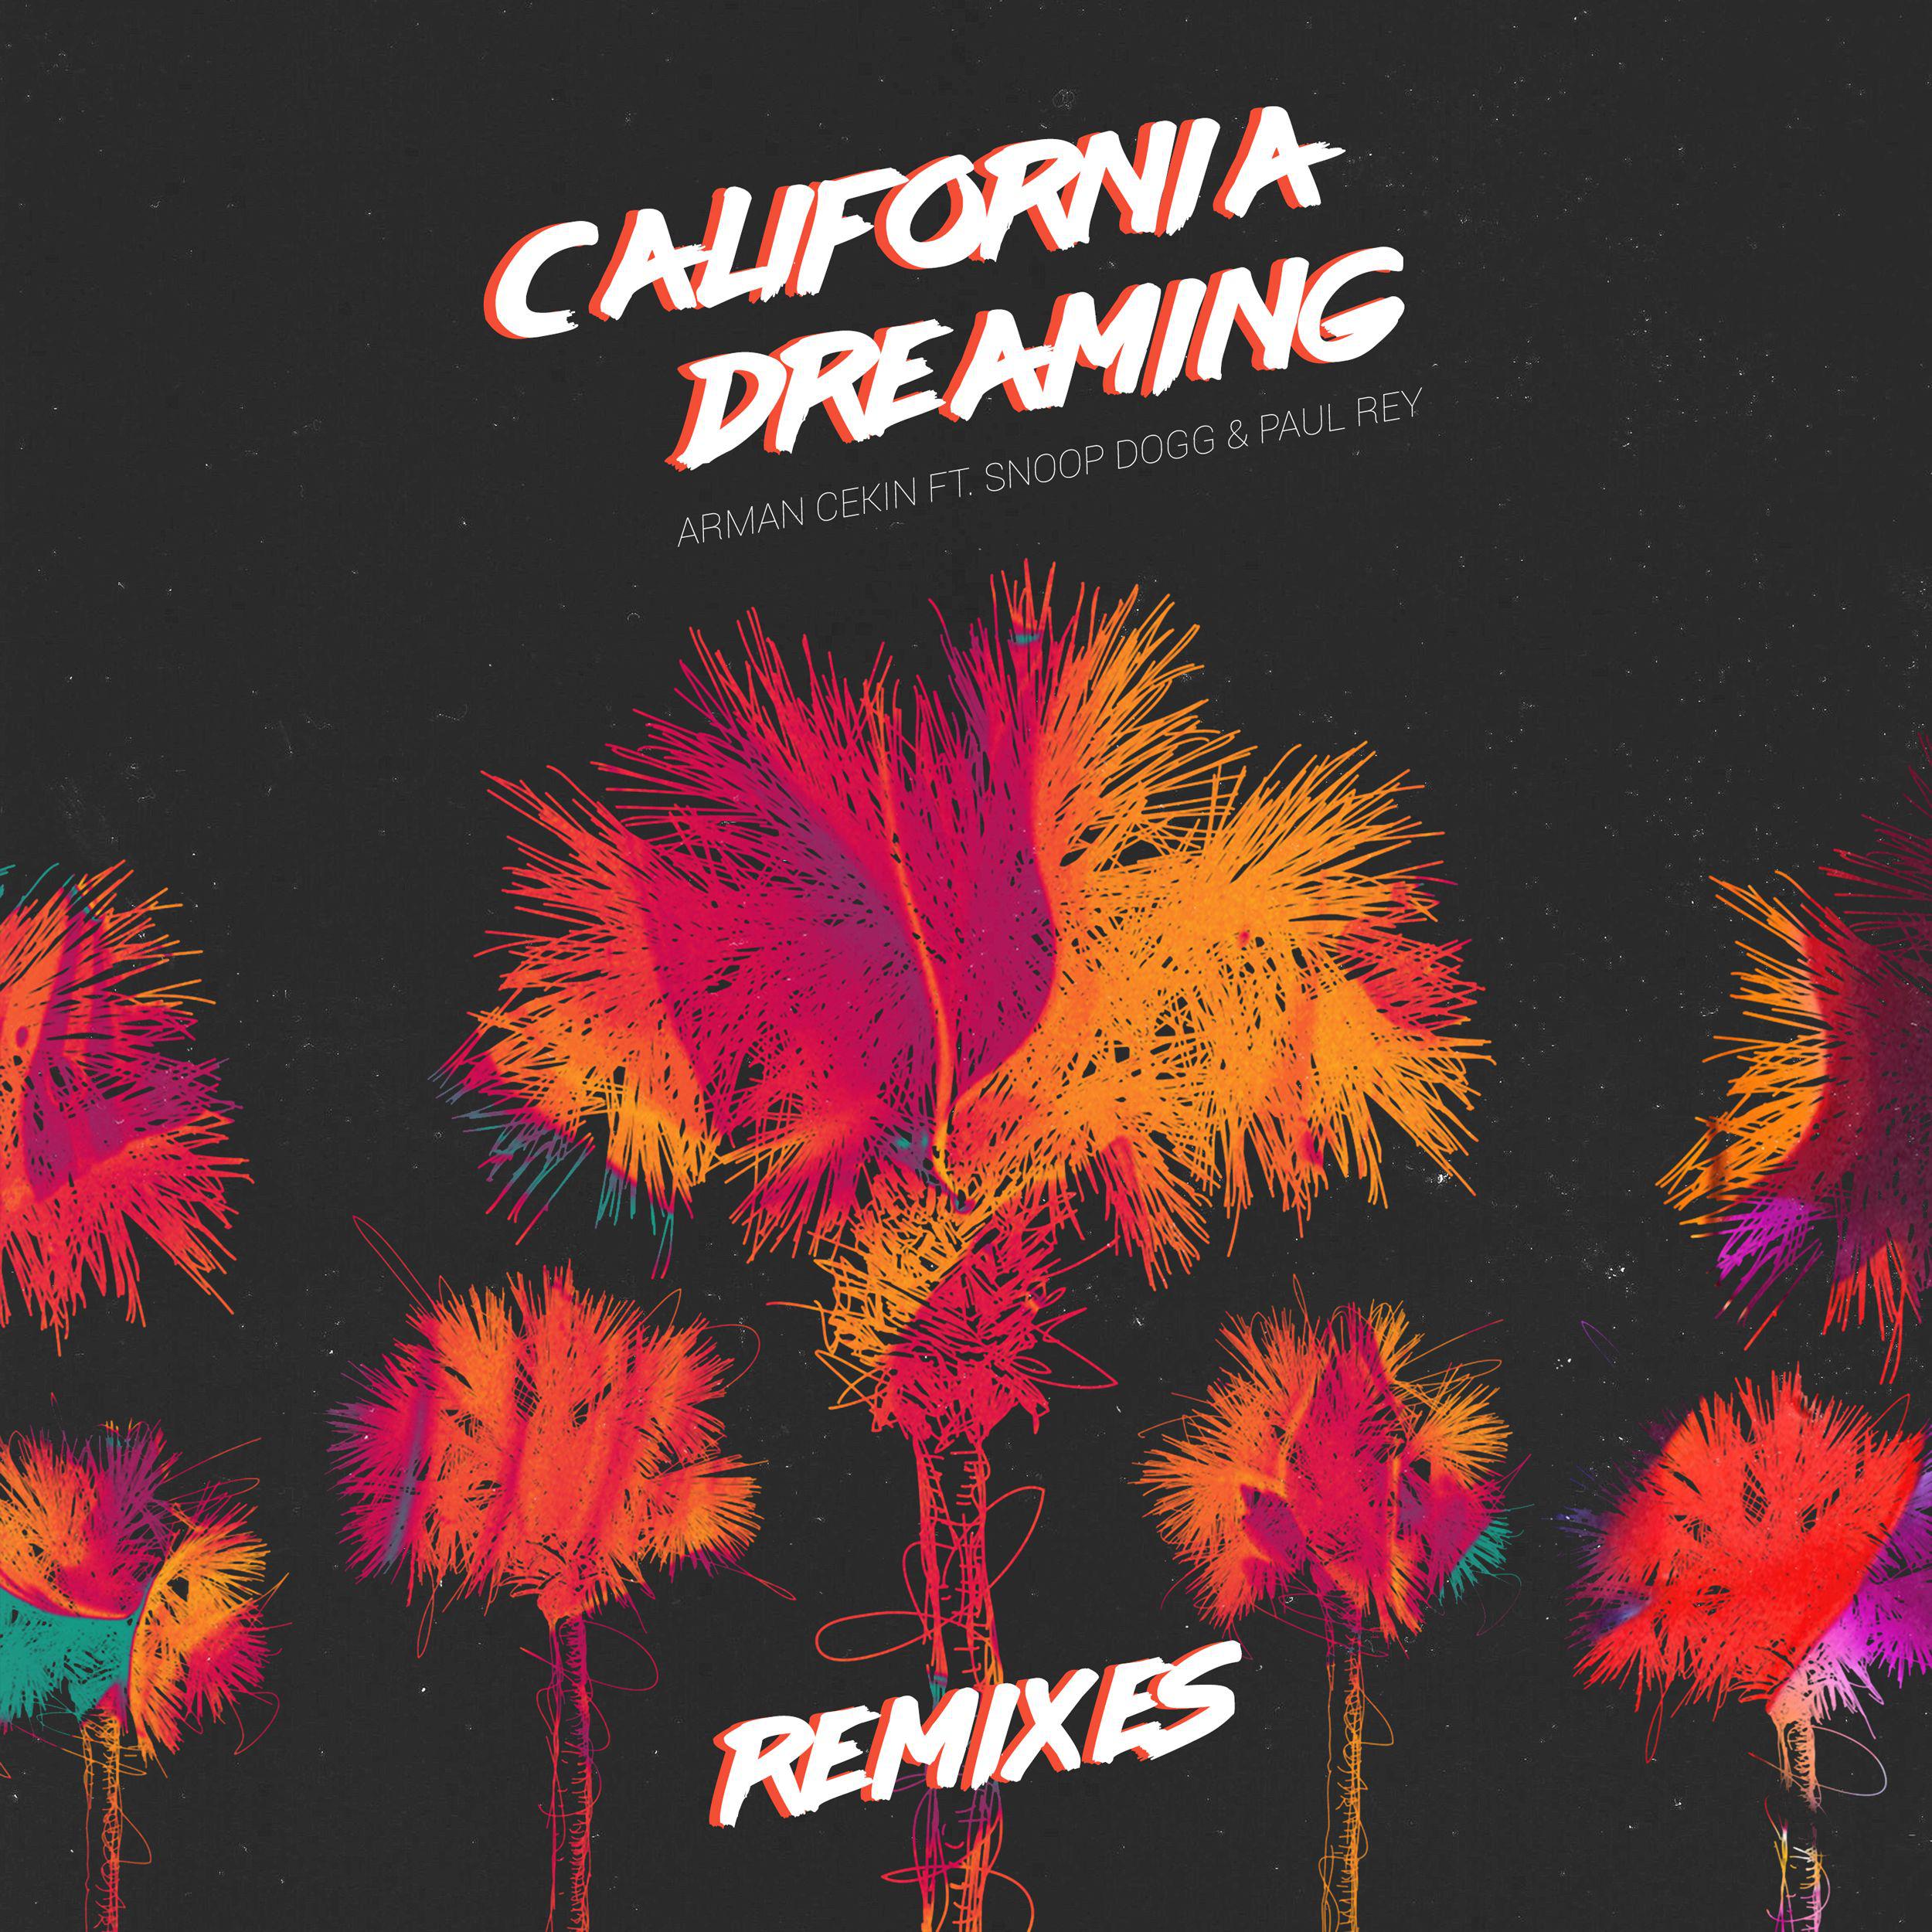 California Dreaming (Casisdead and Swifta Beater Remix)